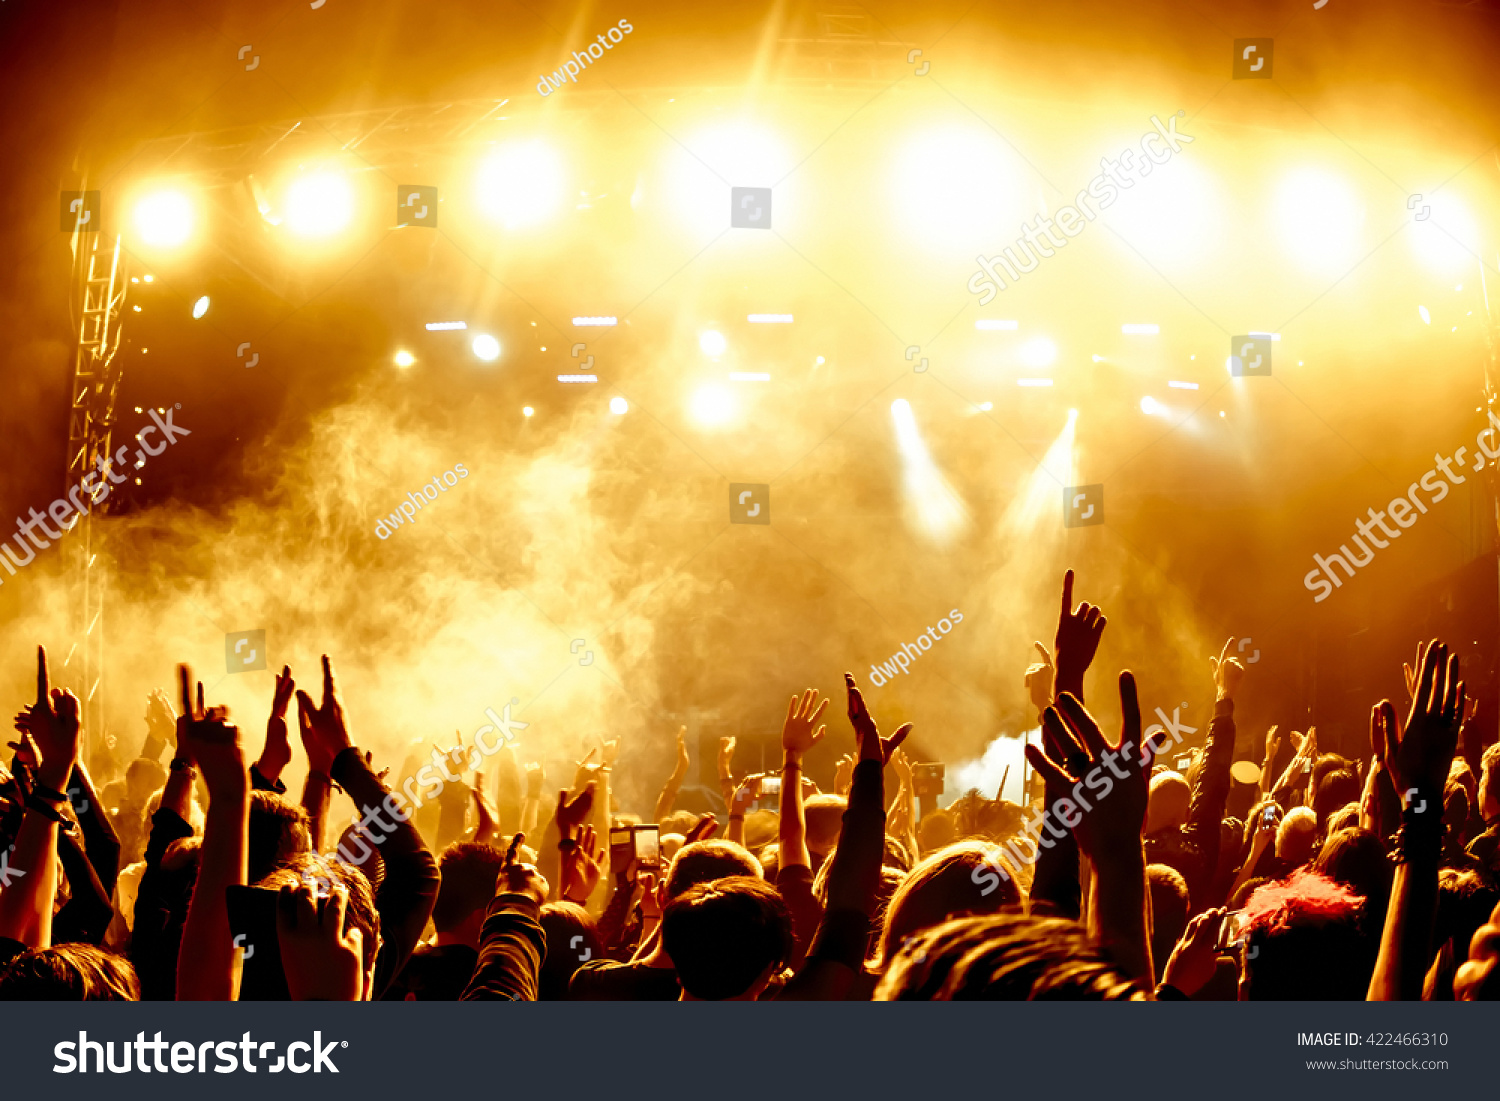 PowerPoint Template: star - silhouettes of concert crowd (ljjlnnkih)